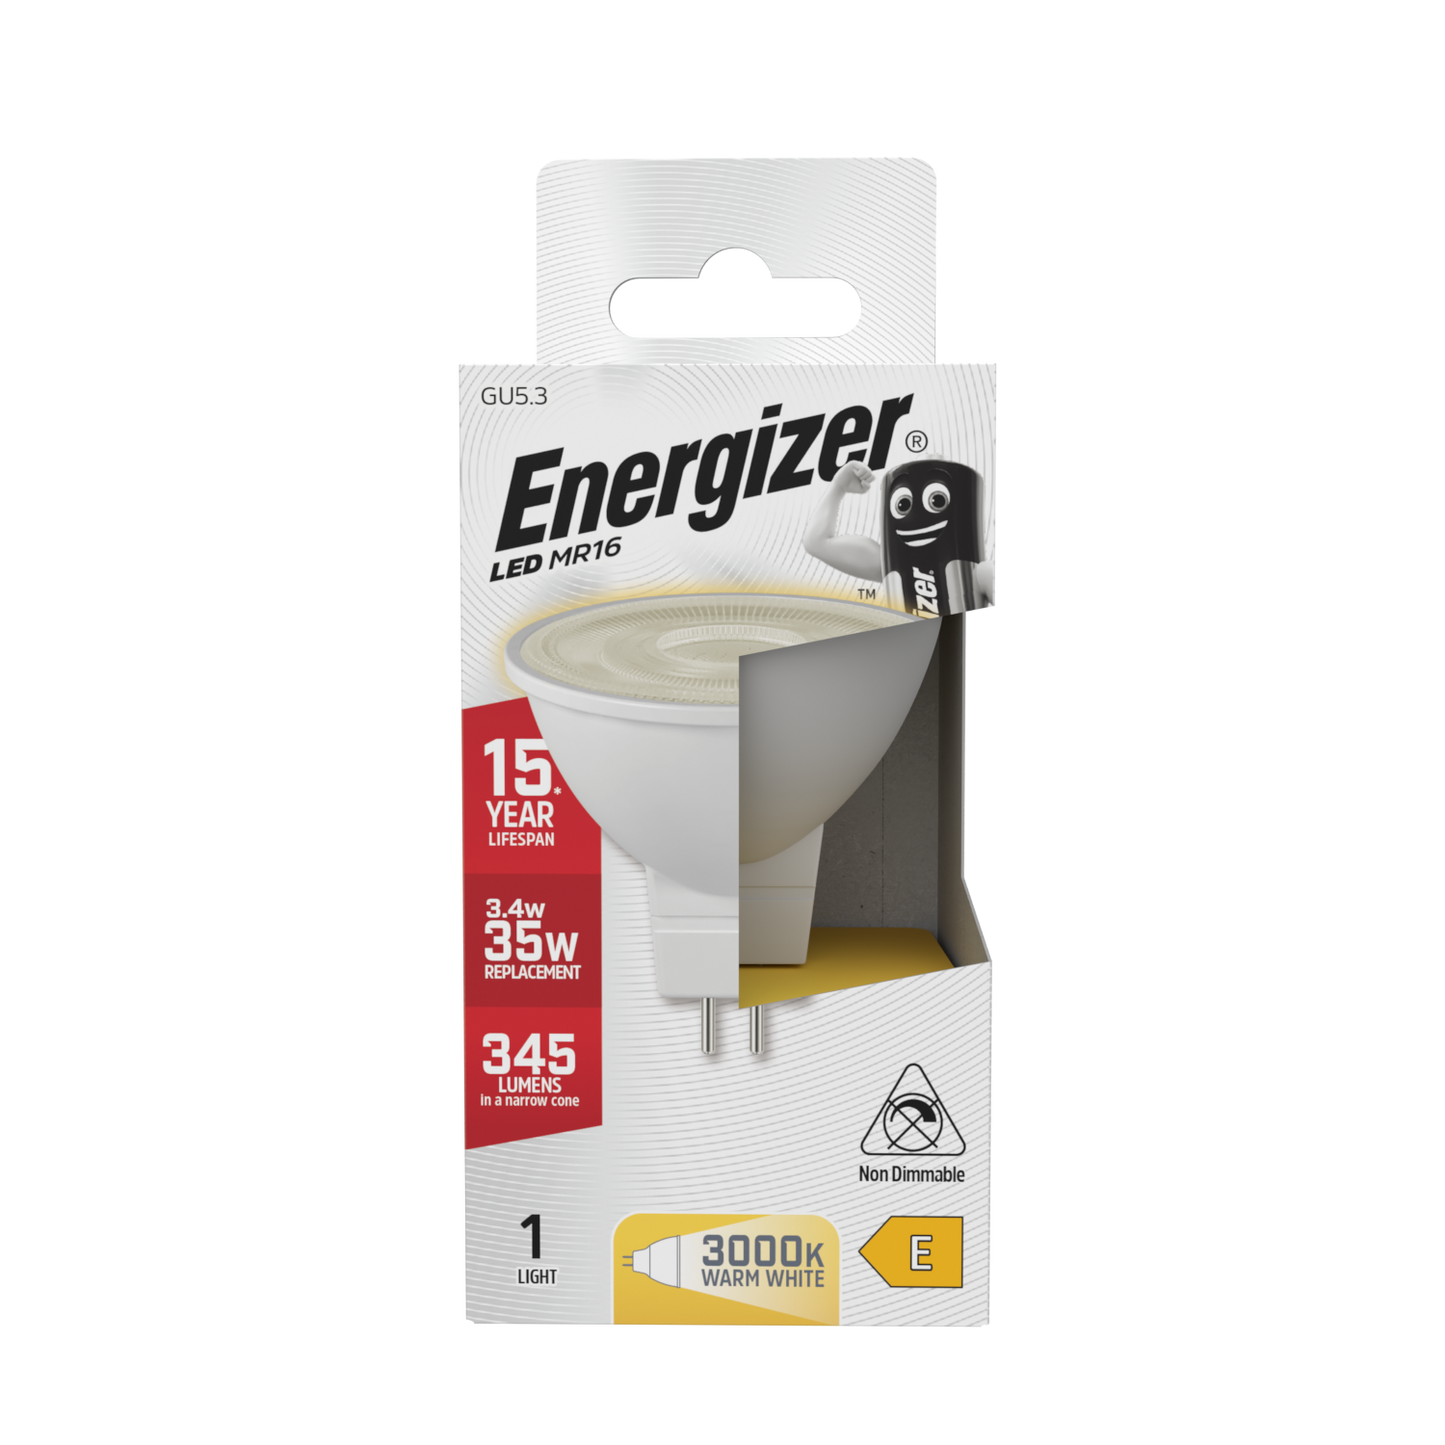 Energizer LED GU5.3 345 Lumens 3.4W 3,000K (Warm White), Box of 1